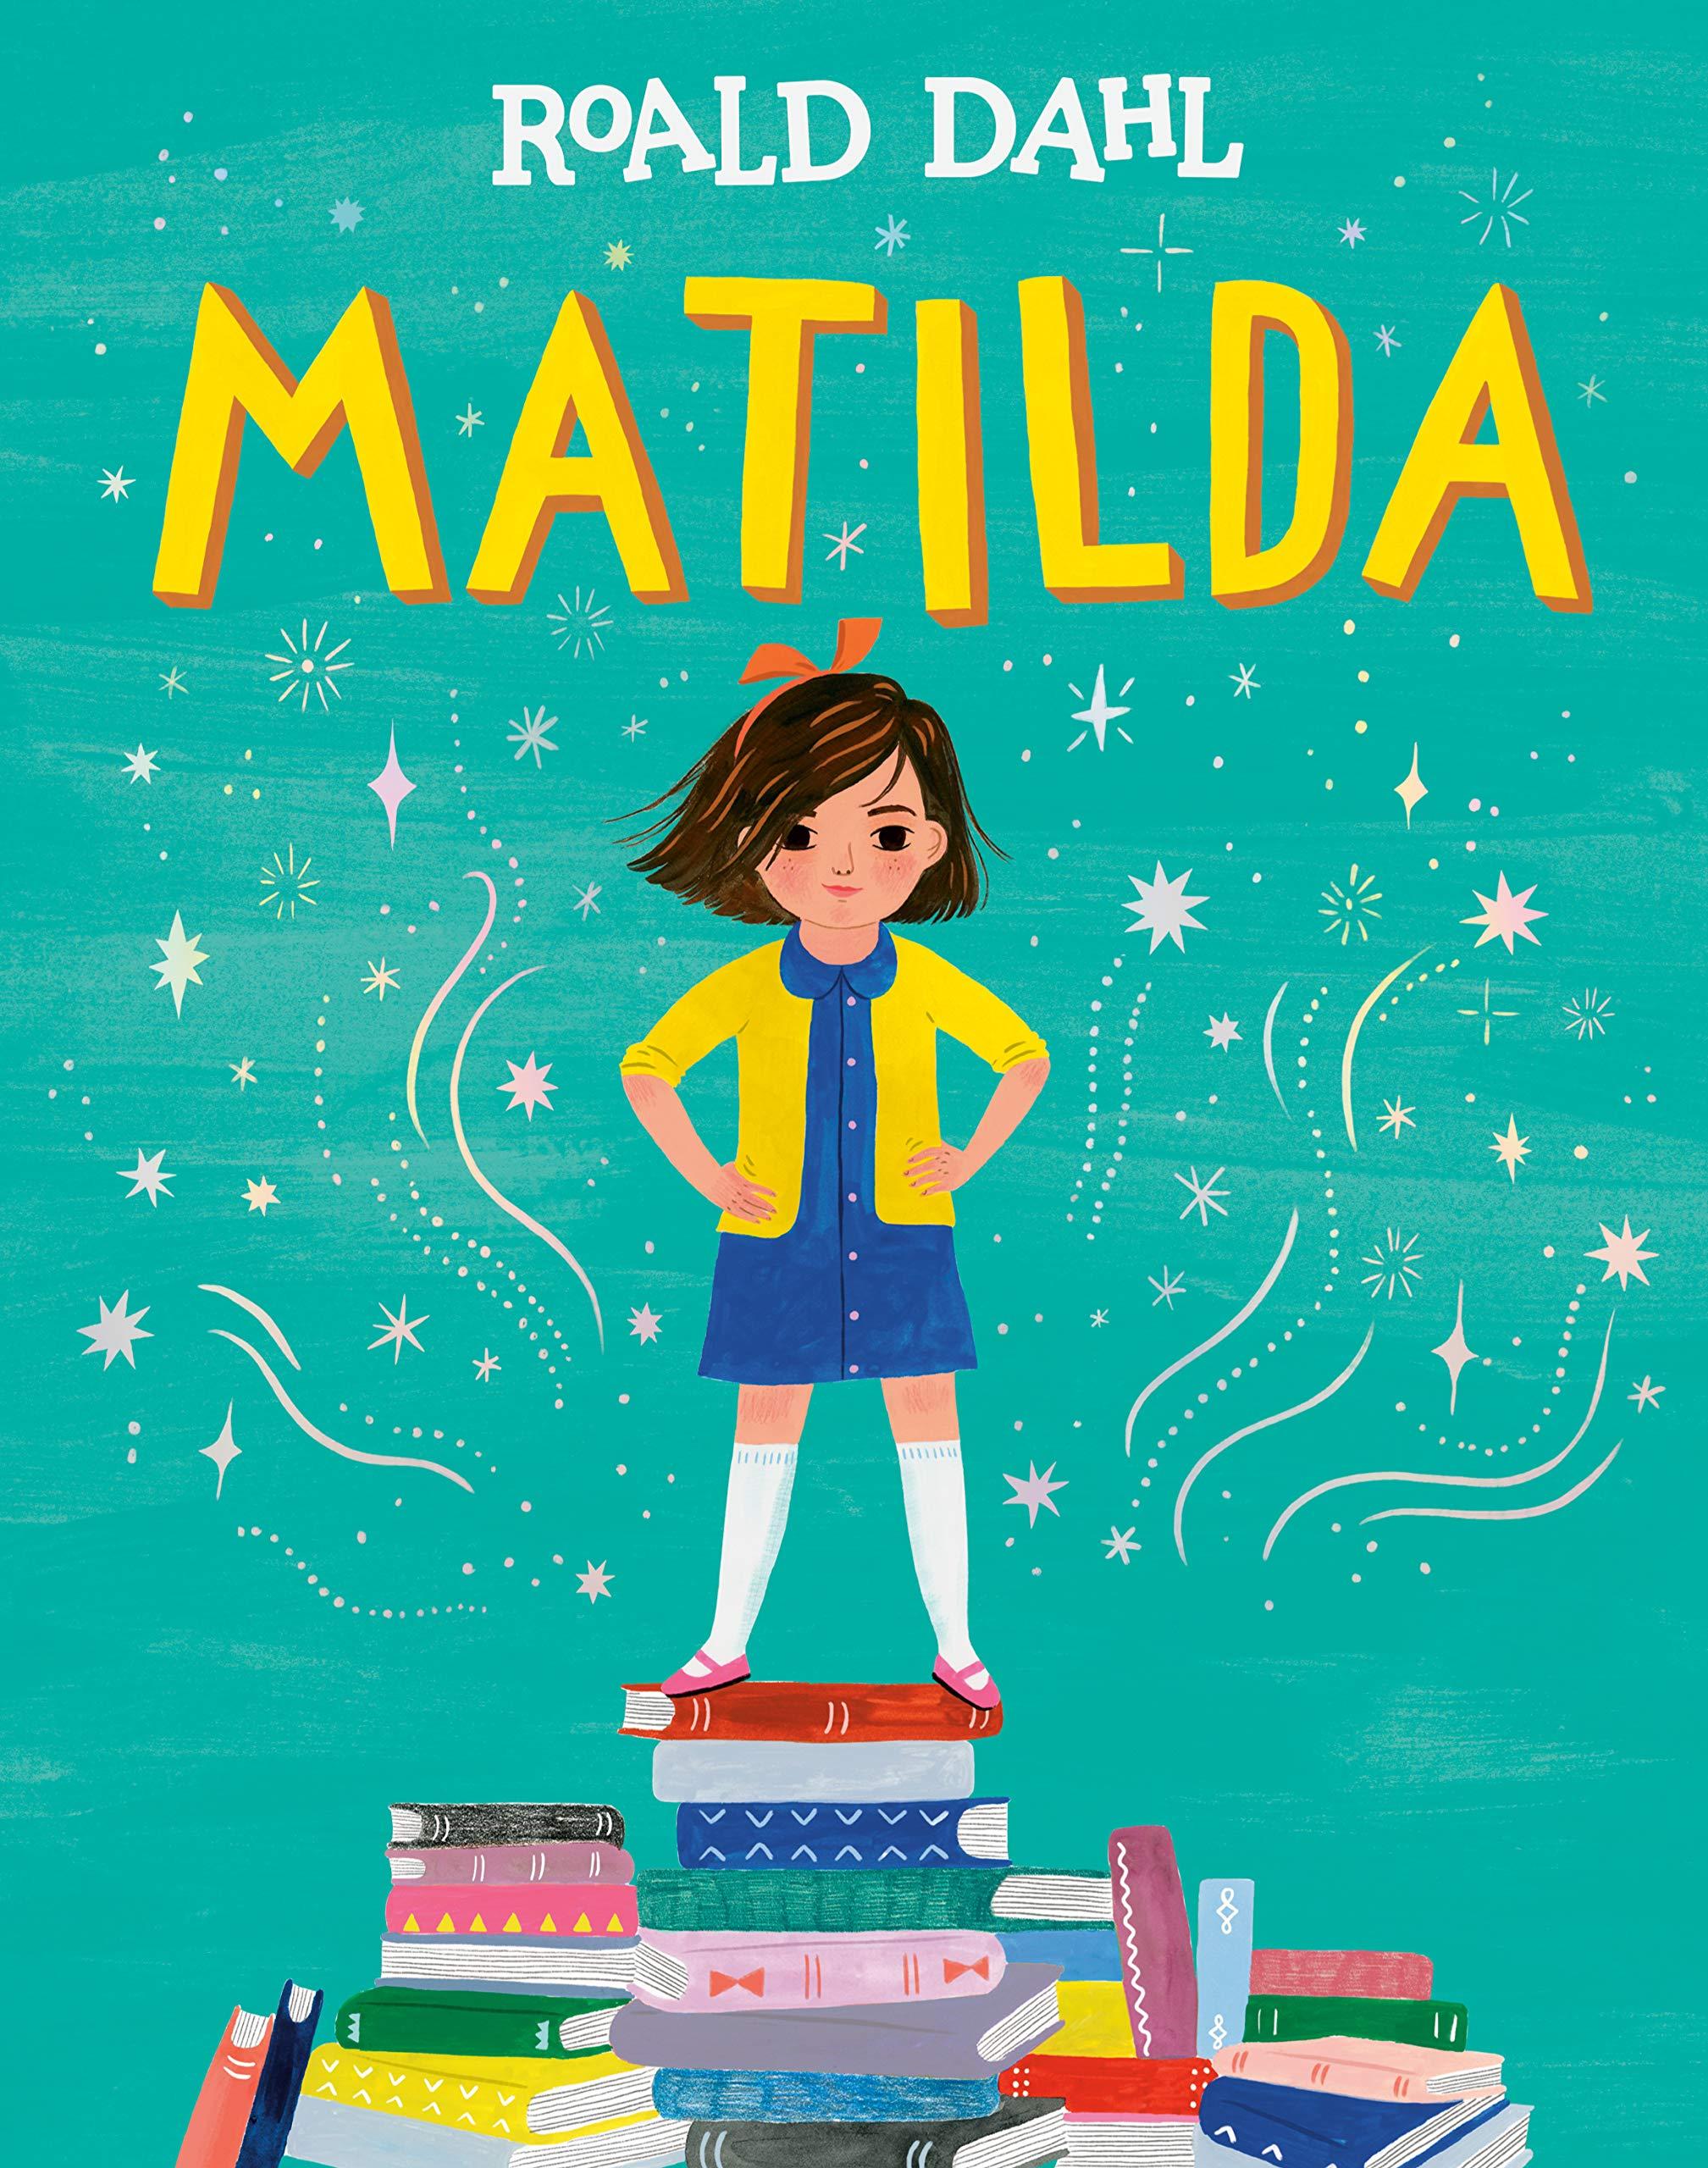 Matilda, by Roald Dahl | Book Review